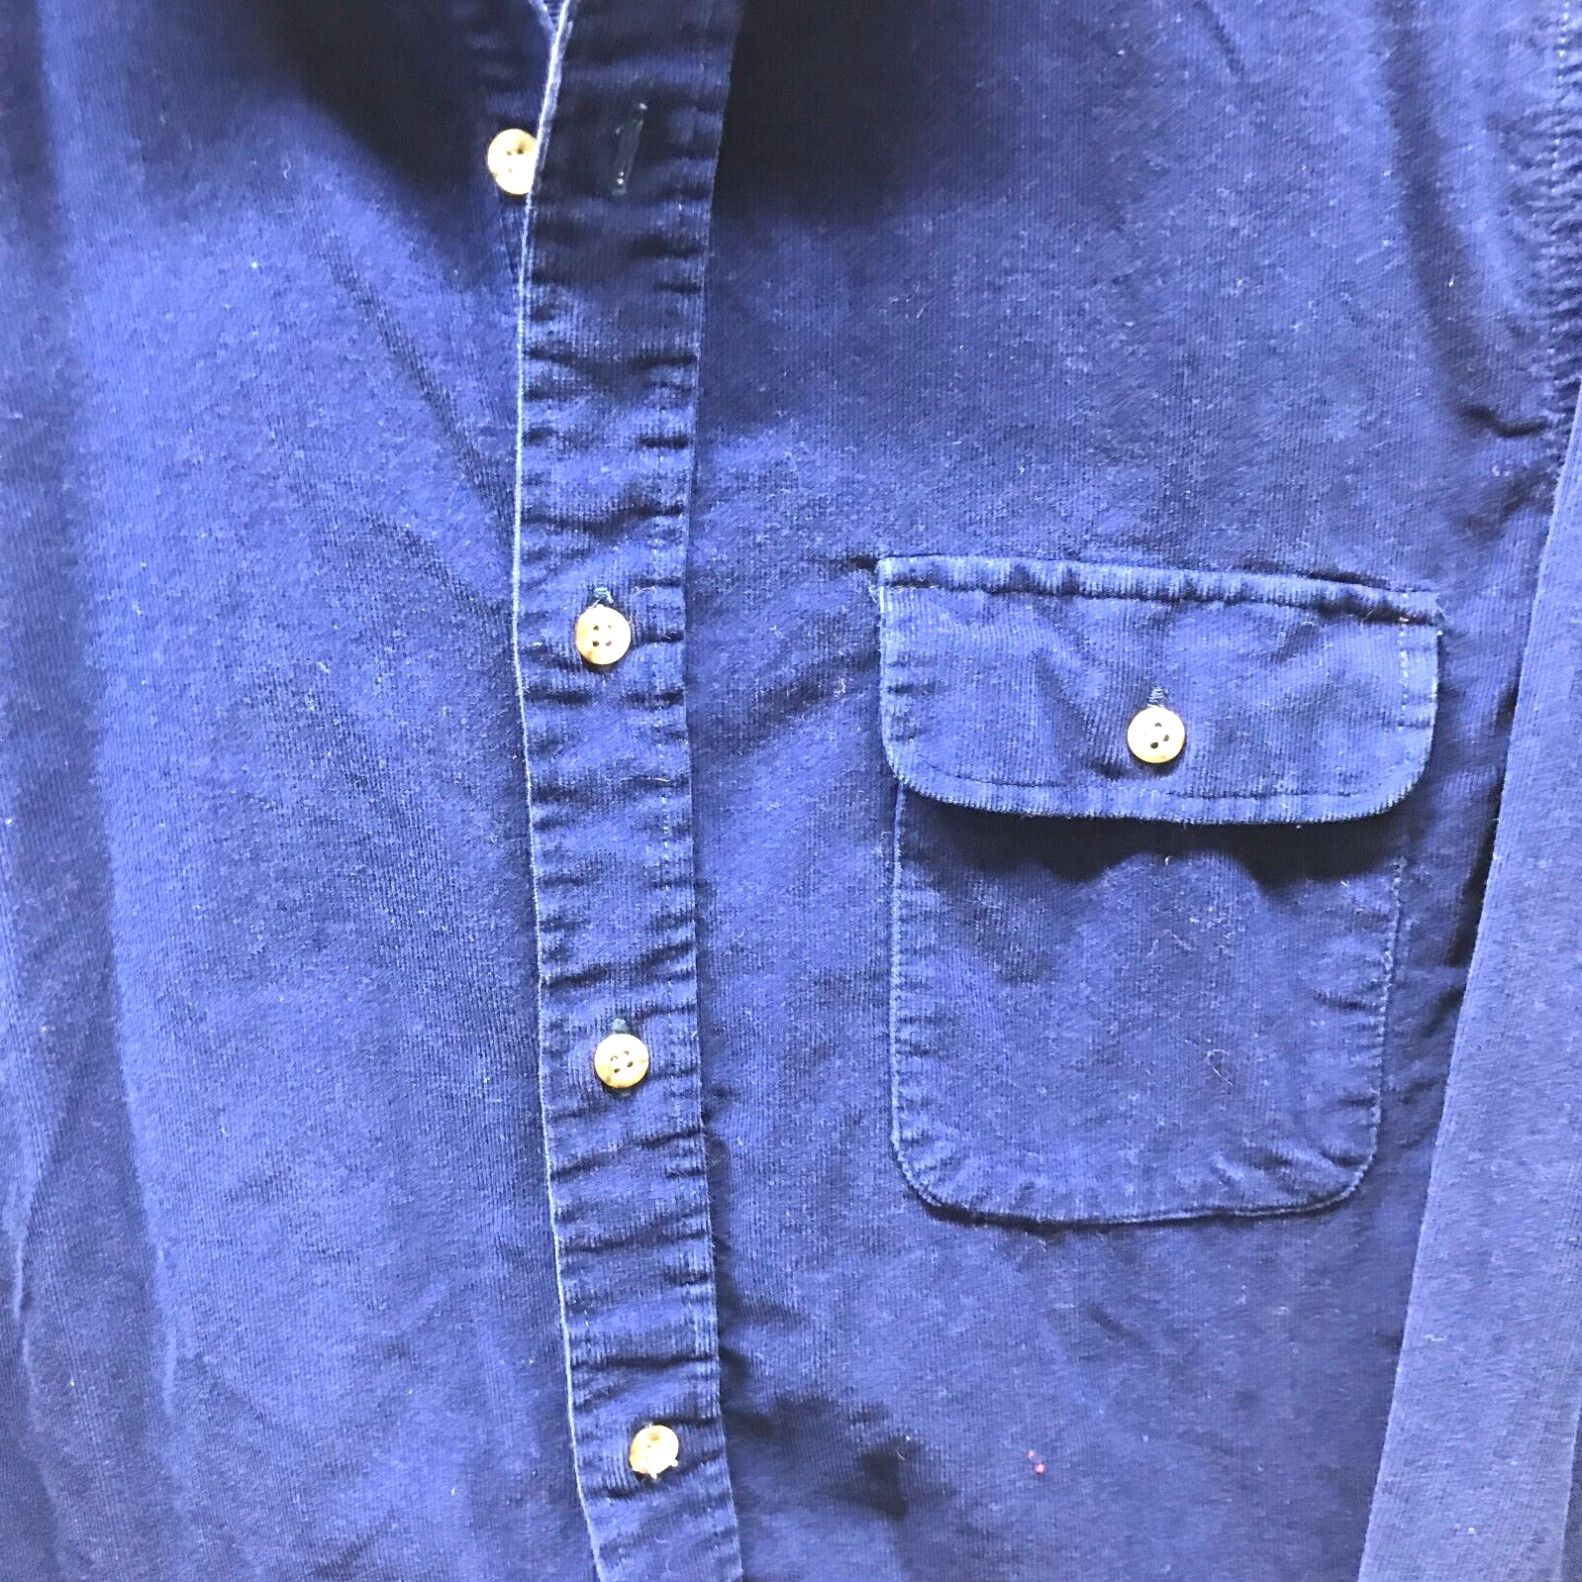 Sears Vintage Sears Shirt Adult Small Blue Corduroy Cotton Outdoor 80s Mens Size US S / EU 44-46 / 1 - 3 Thumbnail